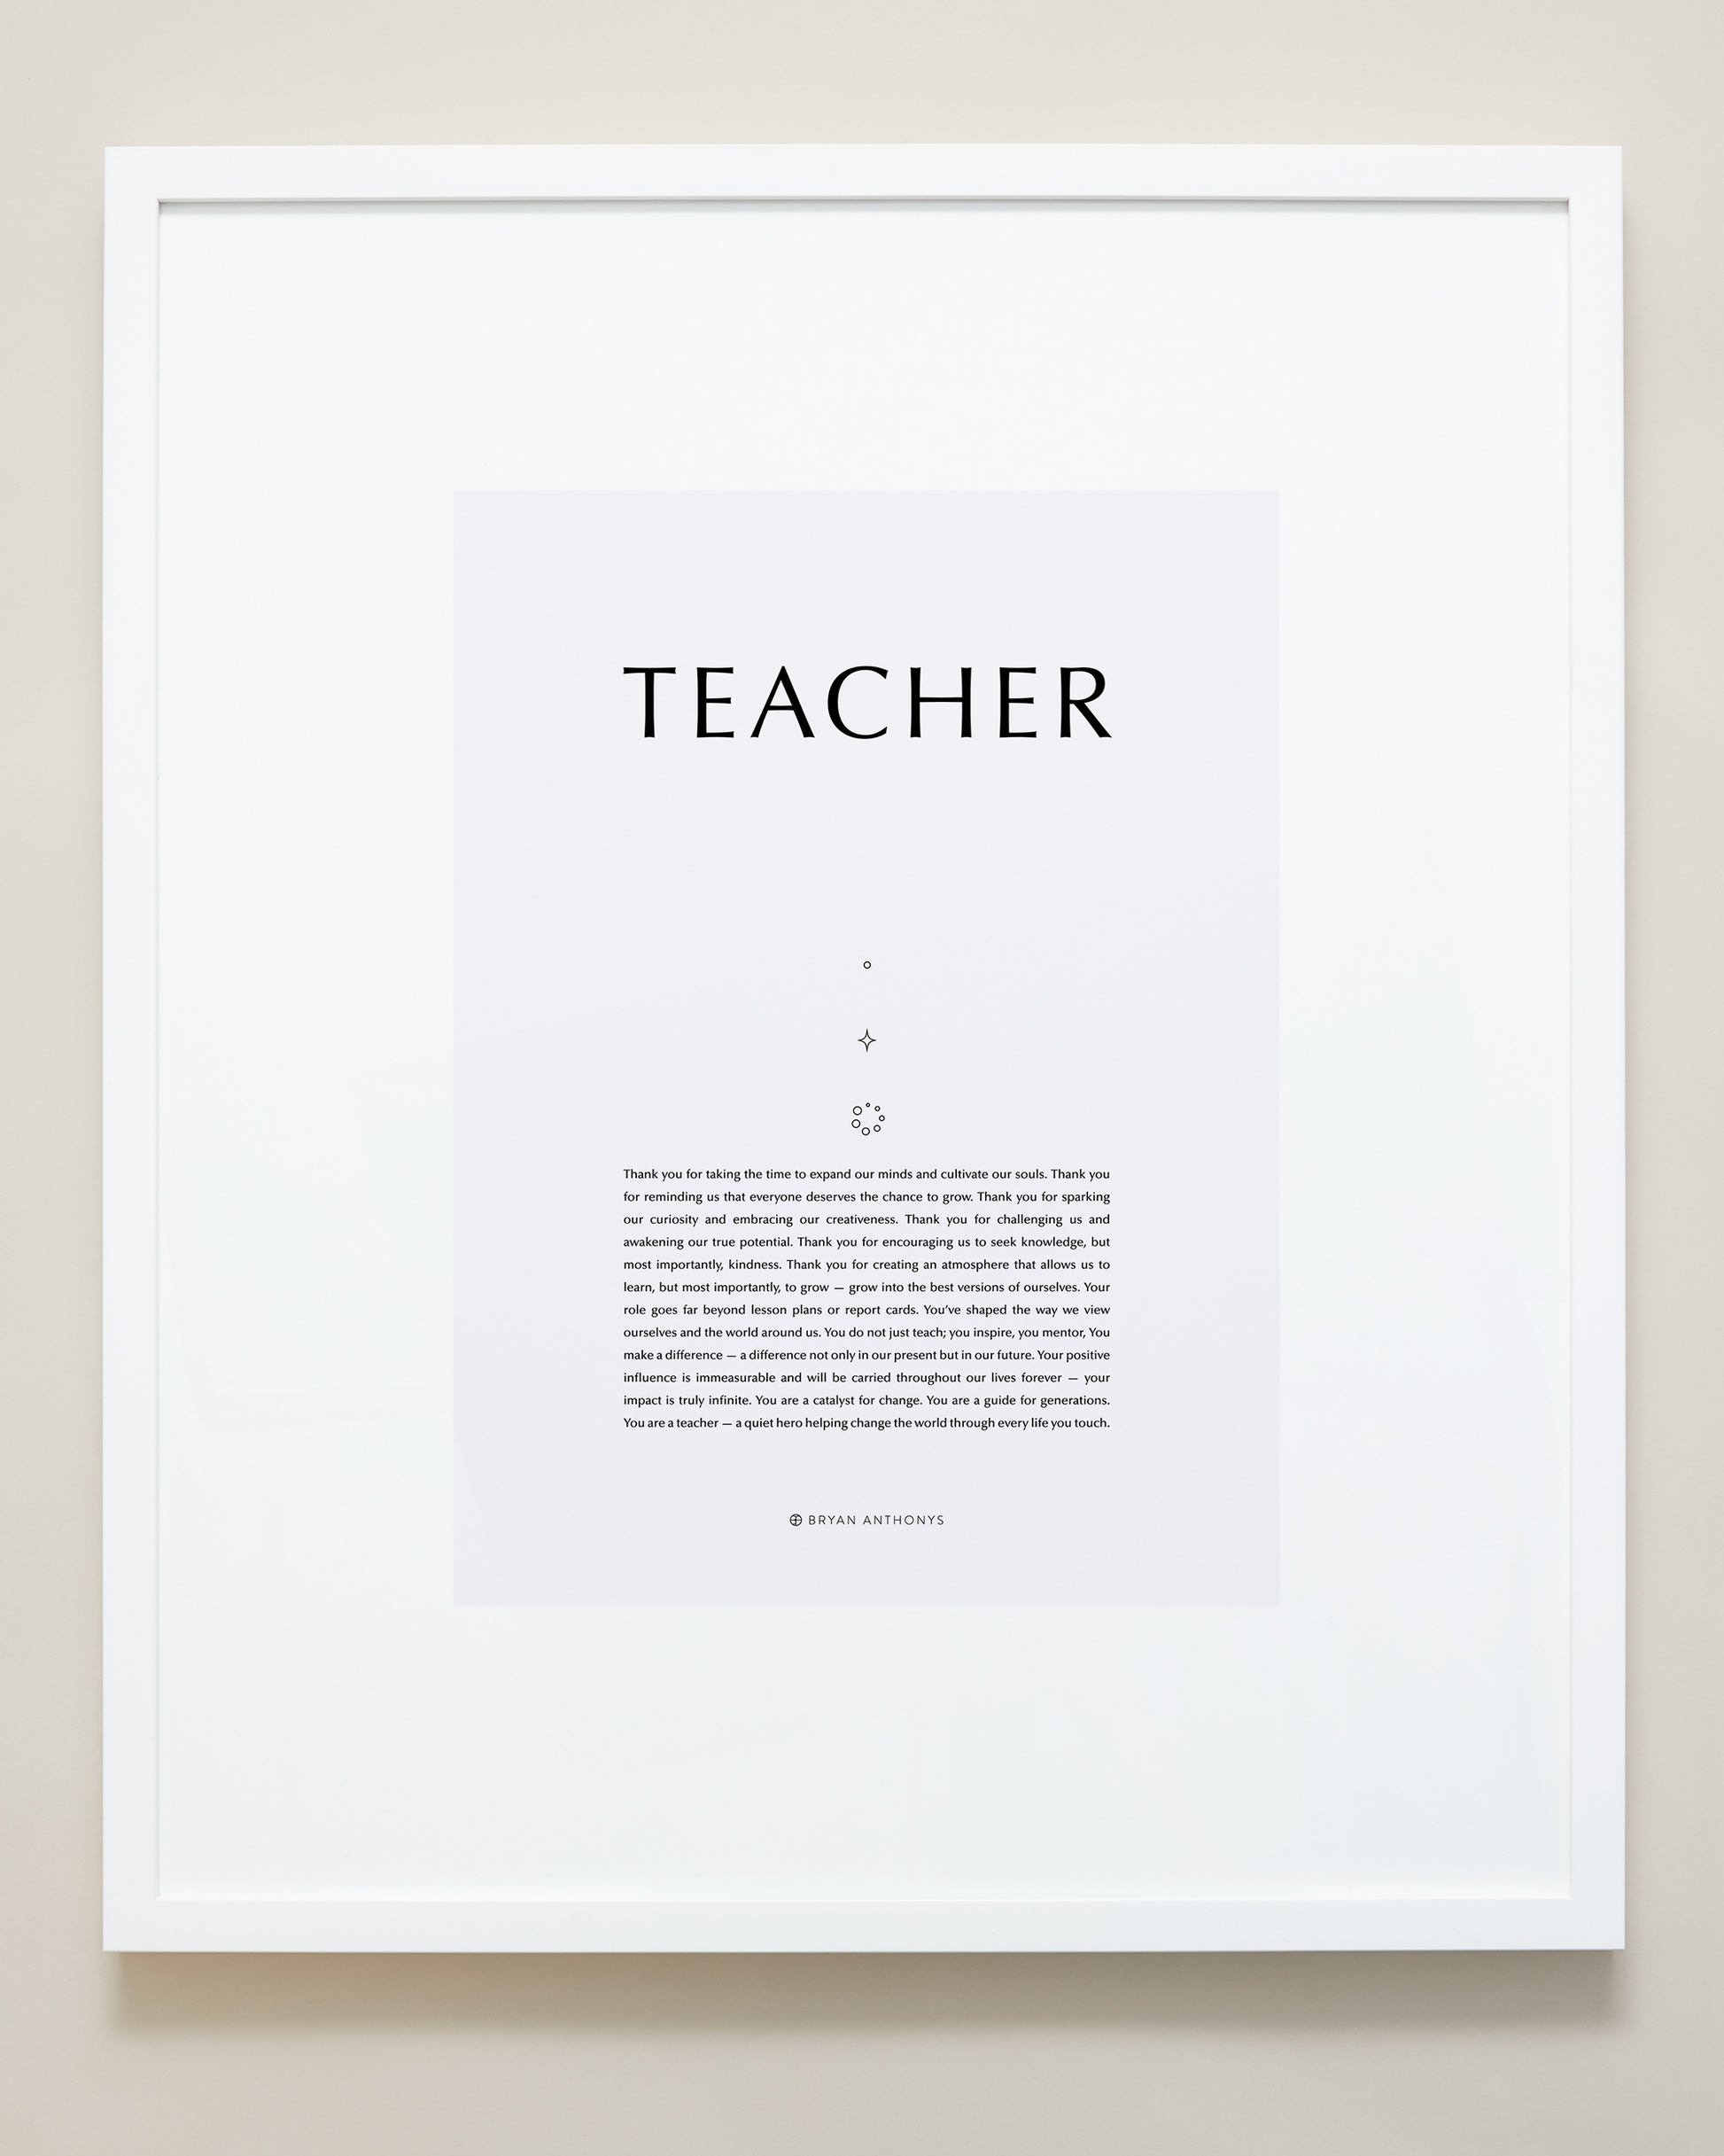 Bryan Anthonys Home Decor Purposeful Prints Teacher Iconic Framed Print Gray Art with White Frame 20x24